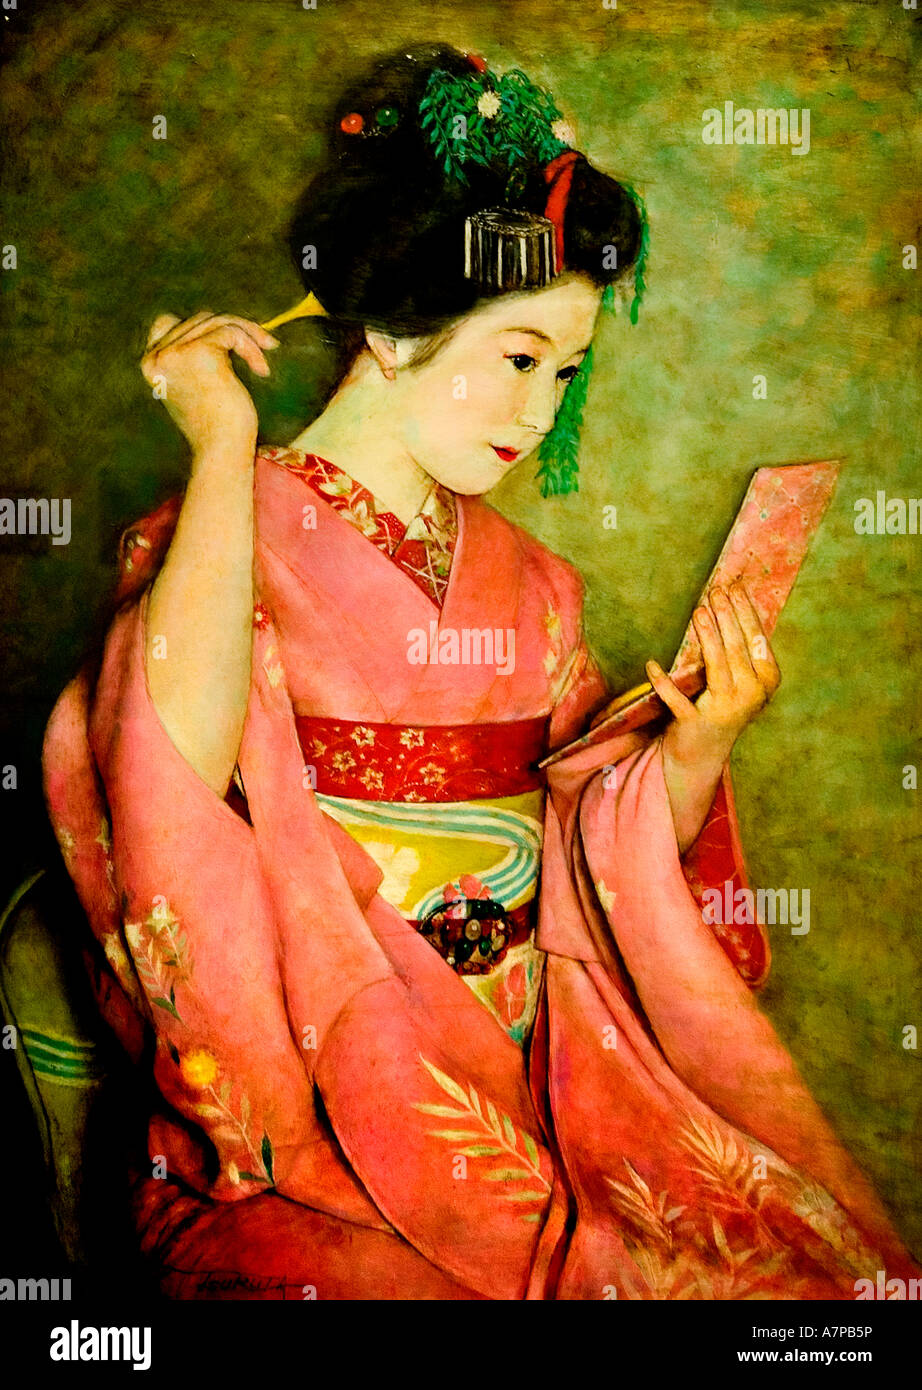 Kyoto Gion Geisha Woman Girl Painting art Gallery Stock Photo